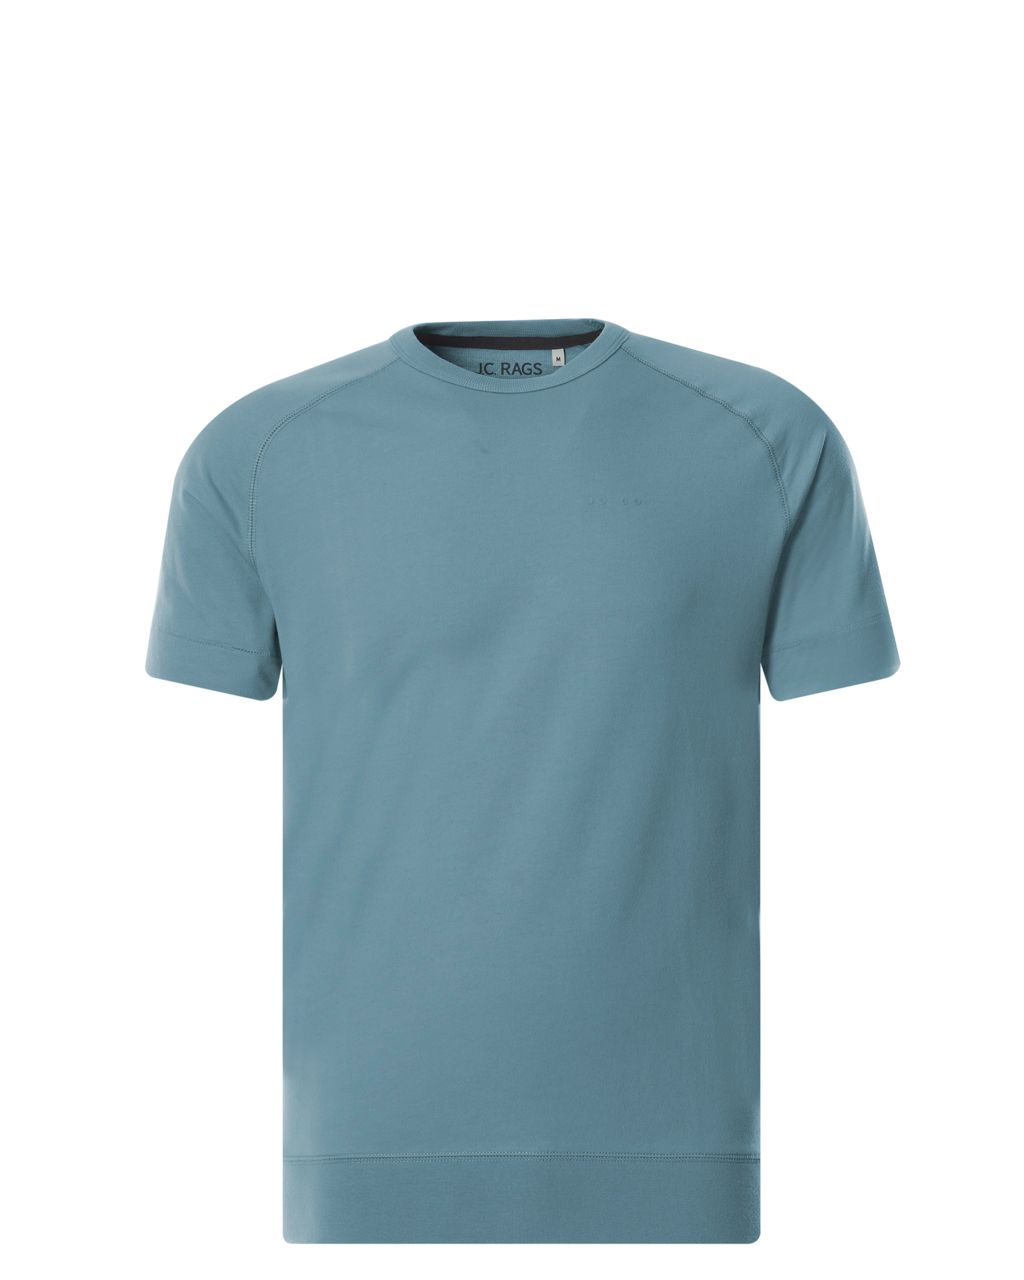 J.C. RAGS Chris T-shirt KM Middenblauw uni 073960-003-L